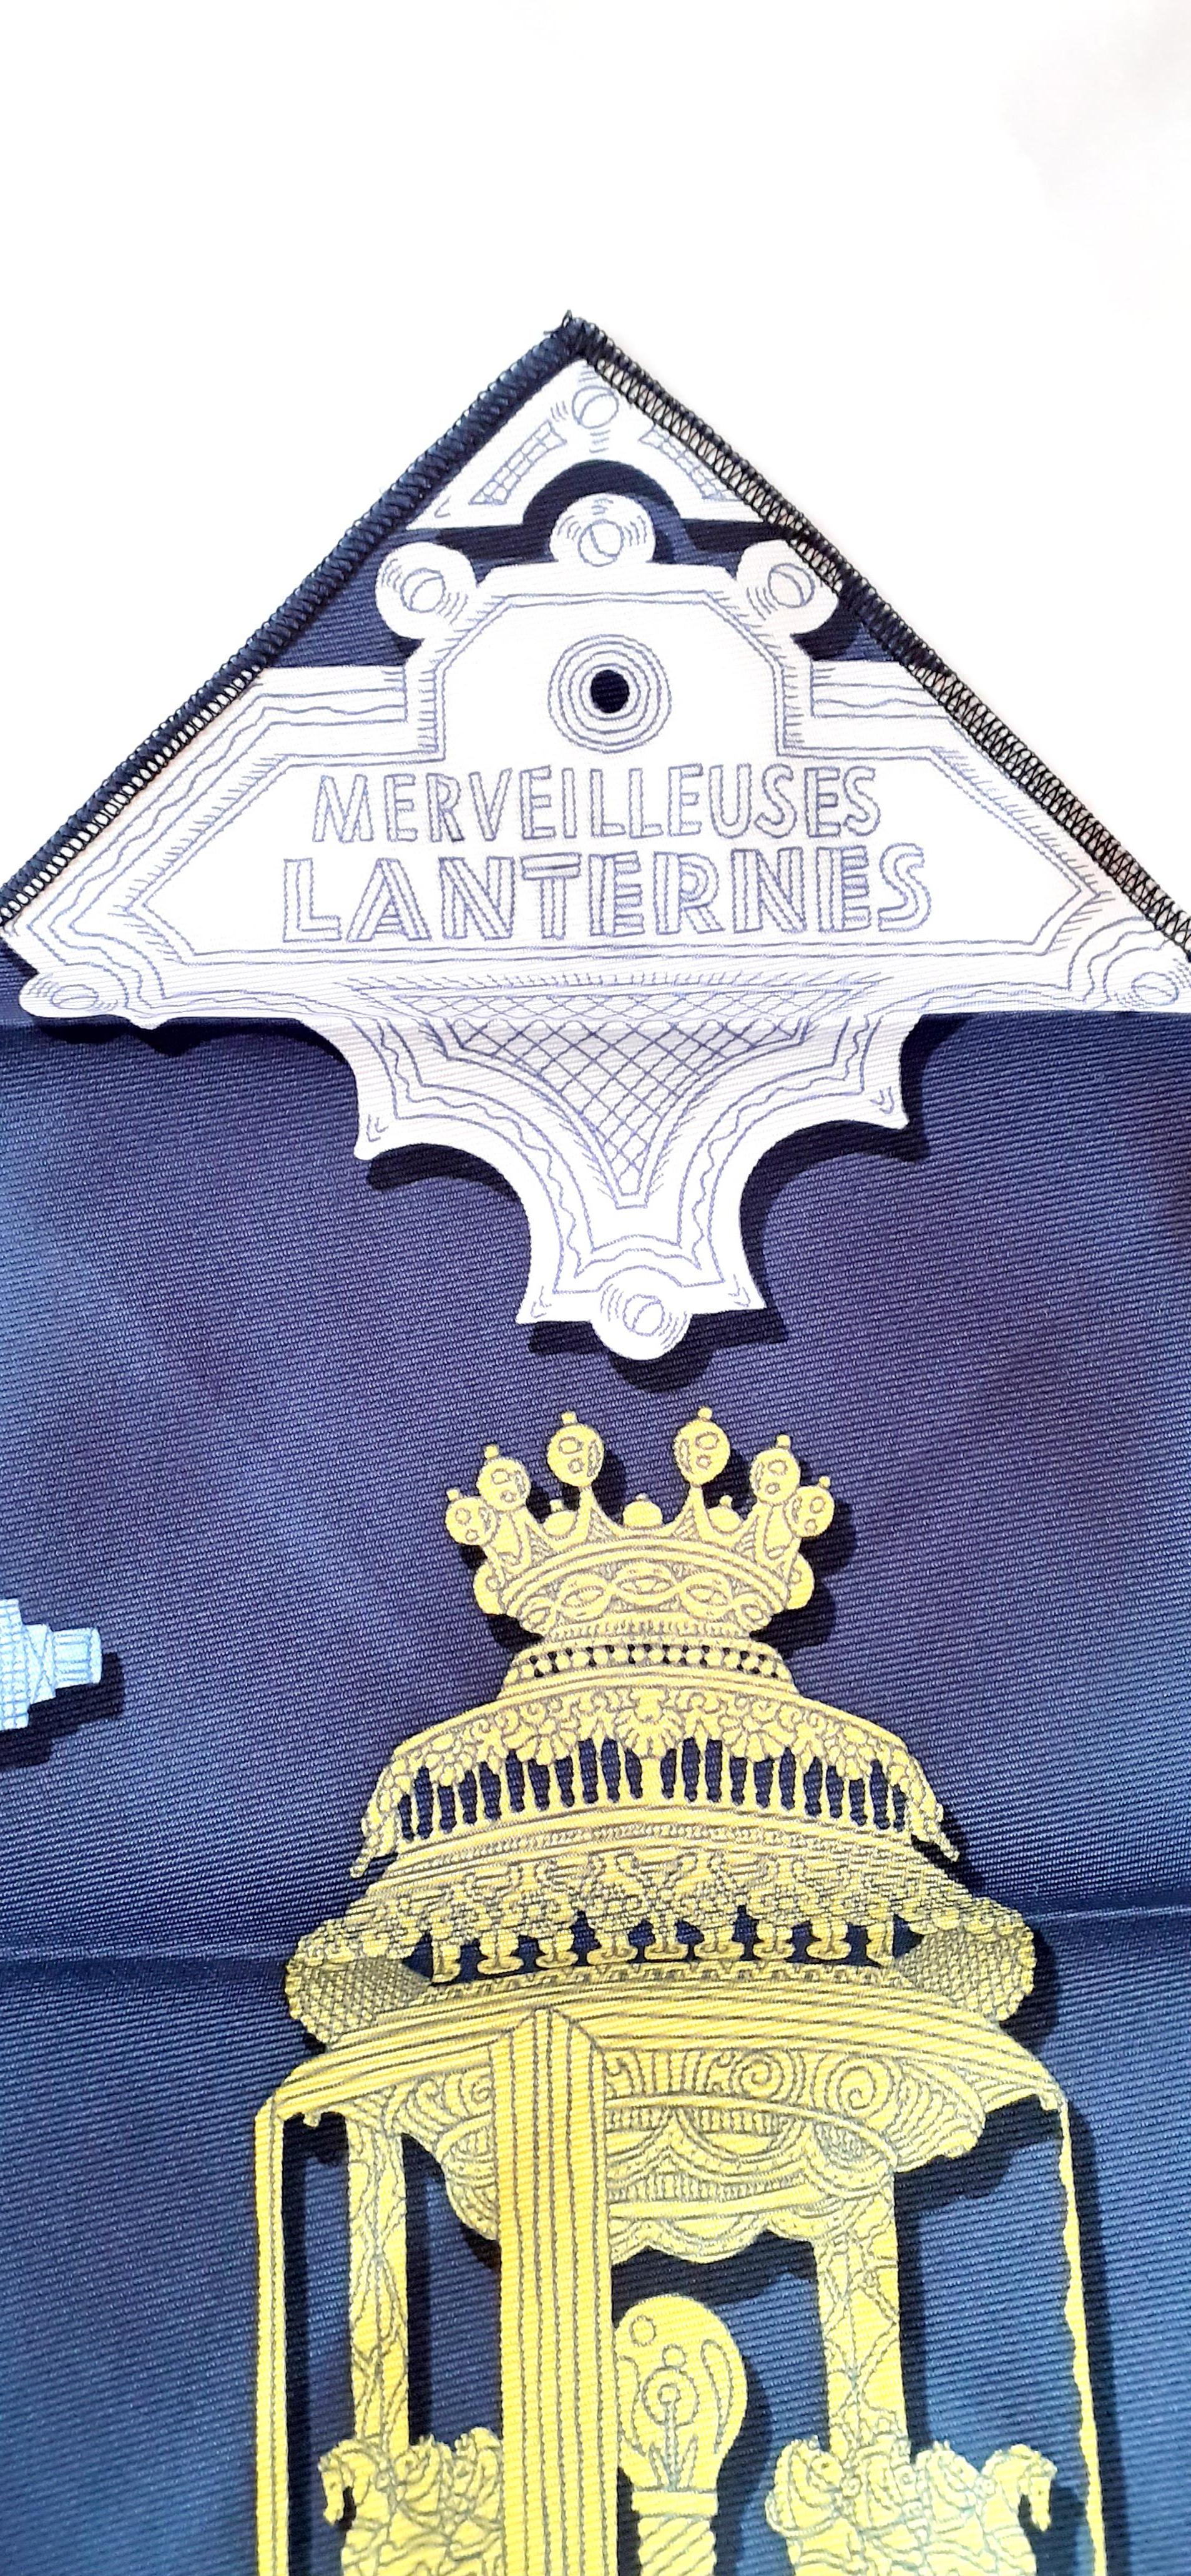 Women's Hermès convertible Collar in Scarf and Hood Merveilleuses Lanternes Petit h For Sale